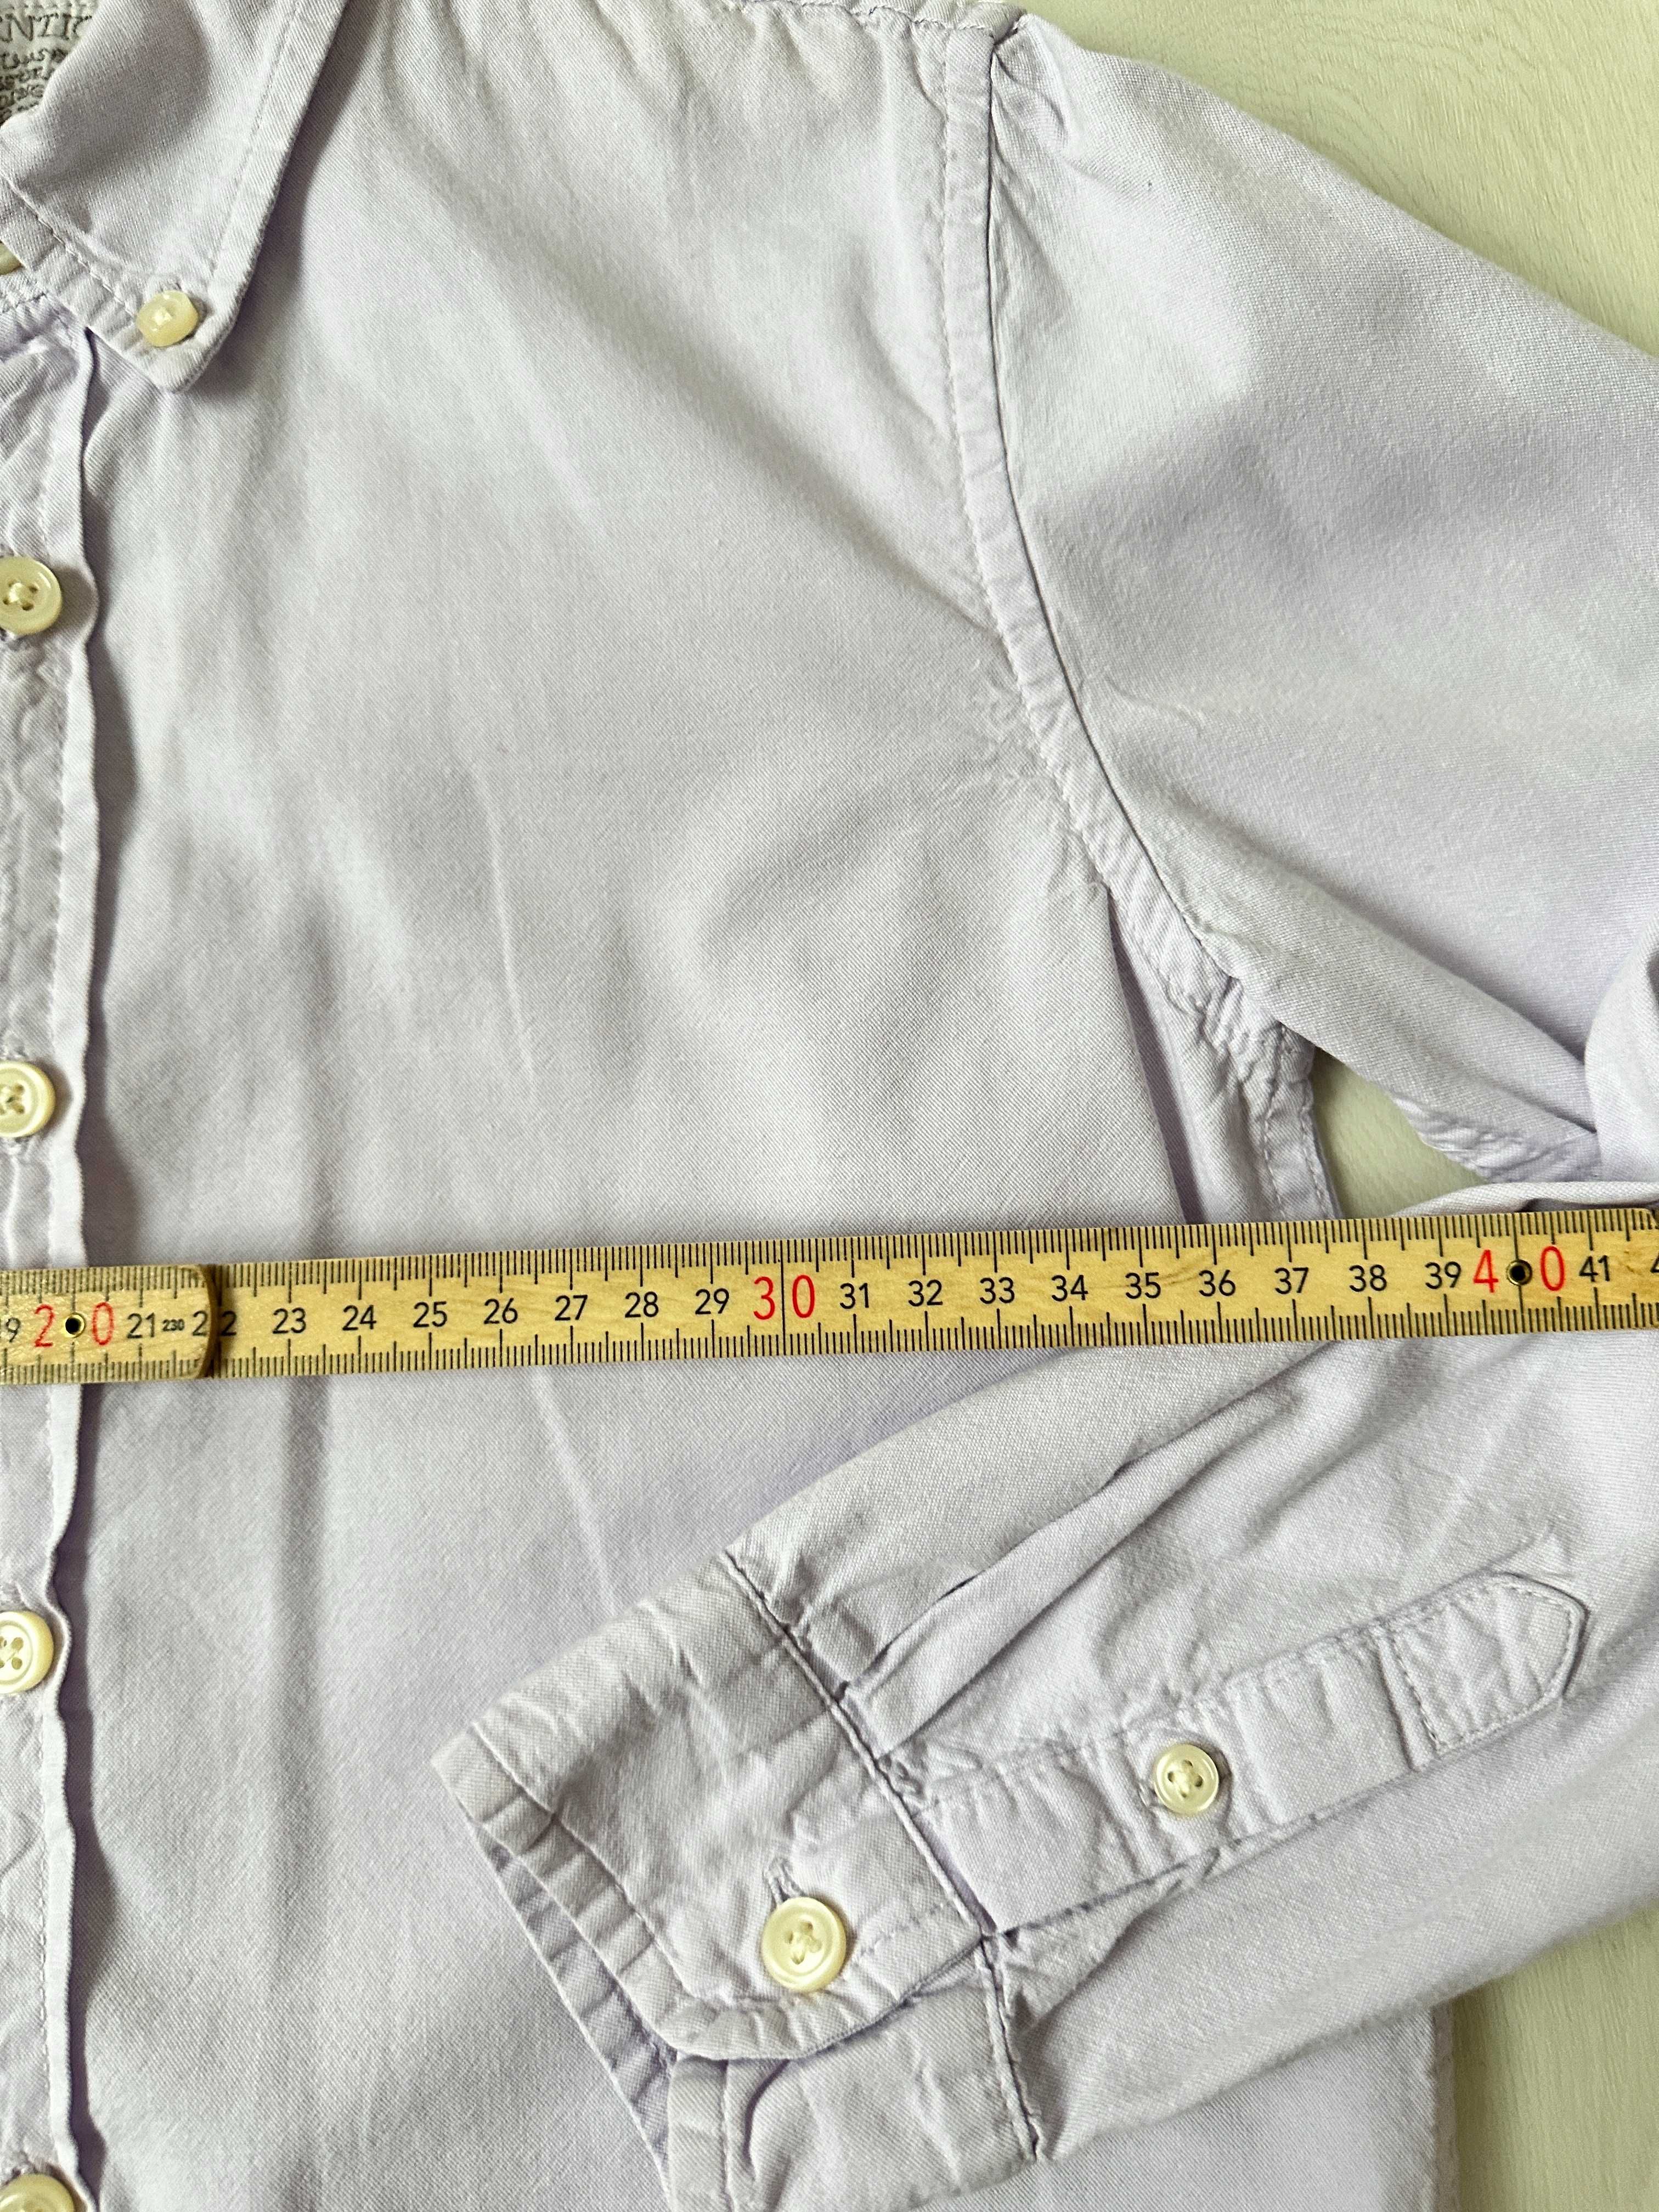 komplet Zara fiolet koszula i sweterek romby 7-8 128 lat stan idealny